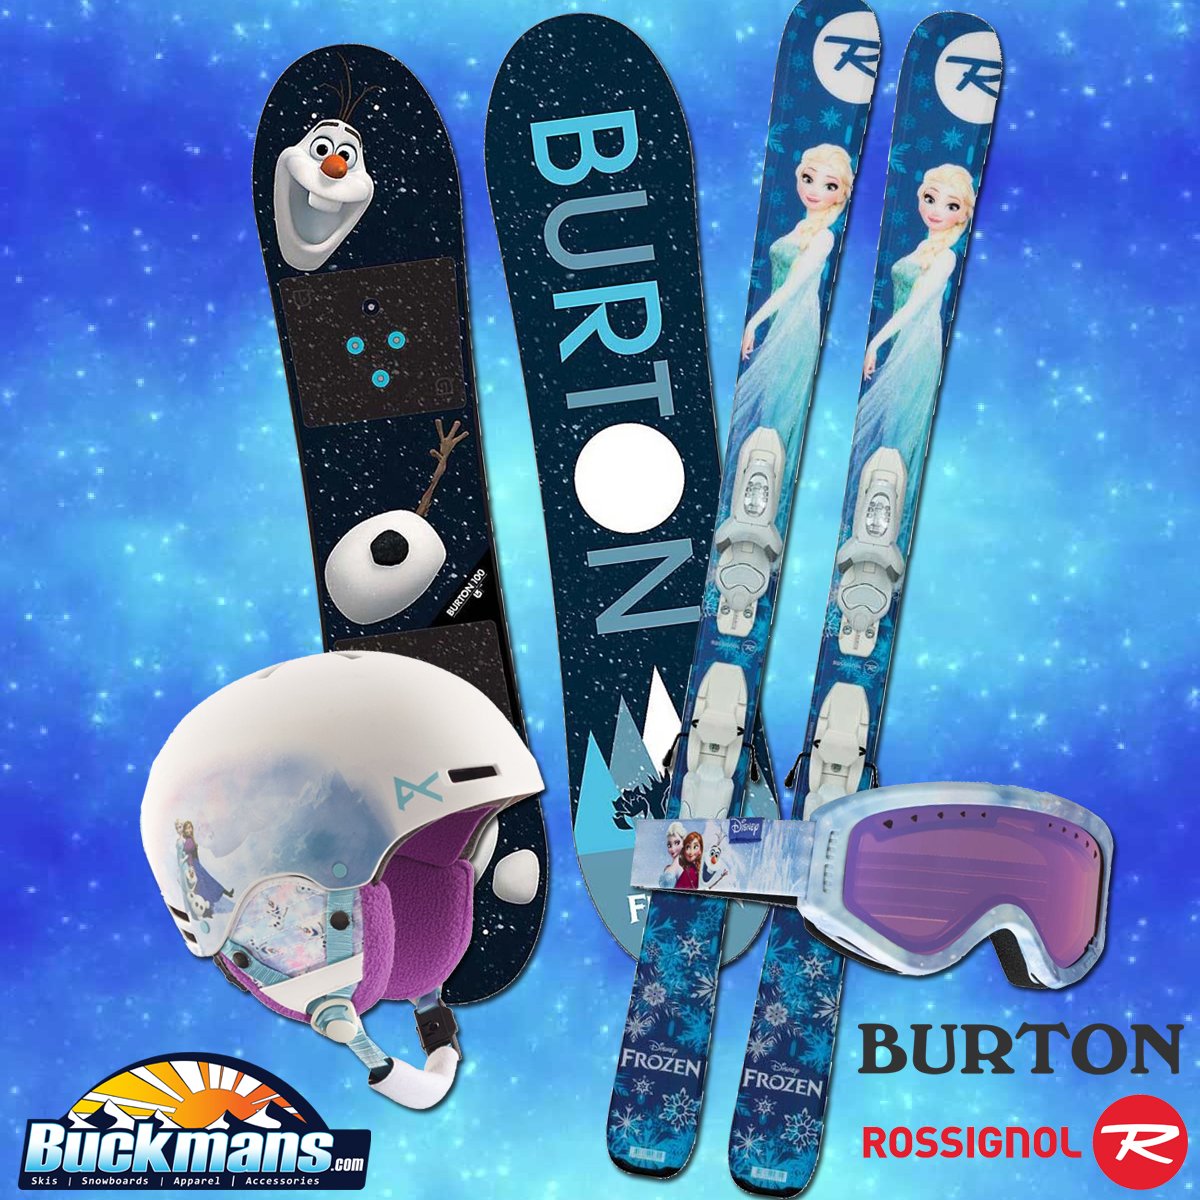 Buckmans Buckmans Twitter for Buckman's Ski And Snowboard Shop King Of Prussia Pa